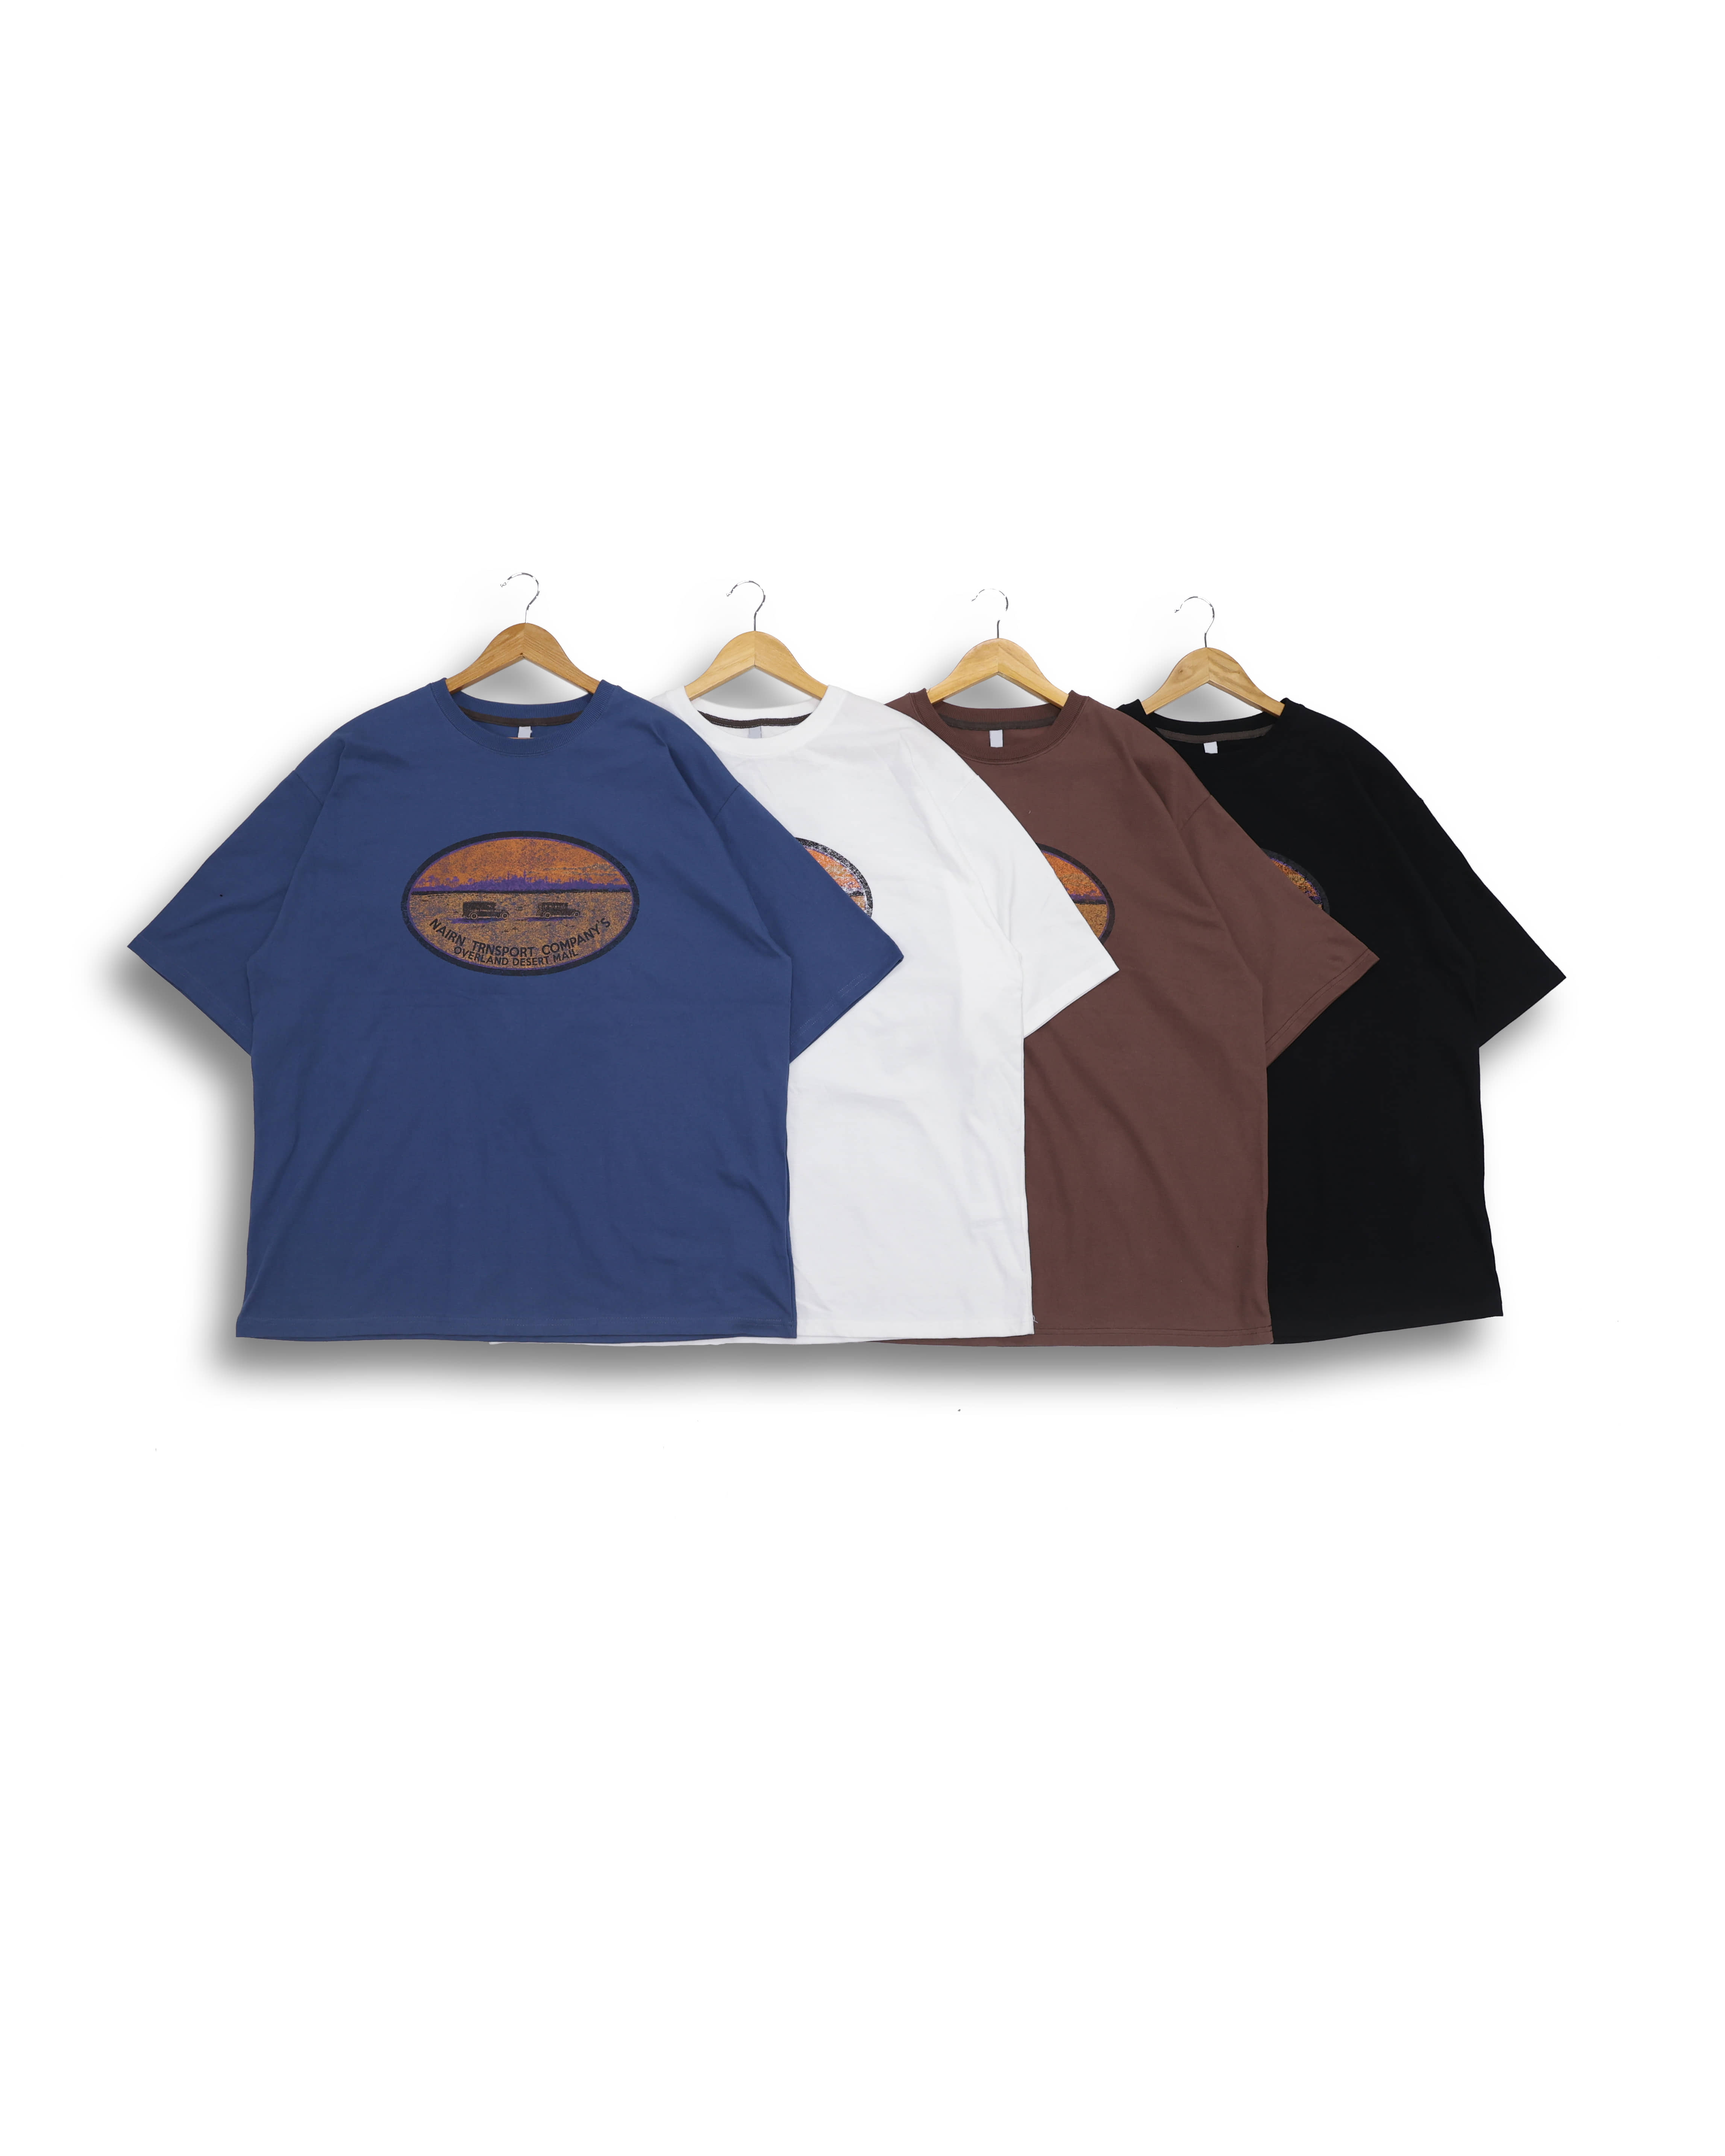 Western Round Oversized T Shirts (Black/Brown/Blue/White)